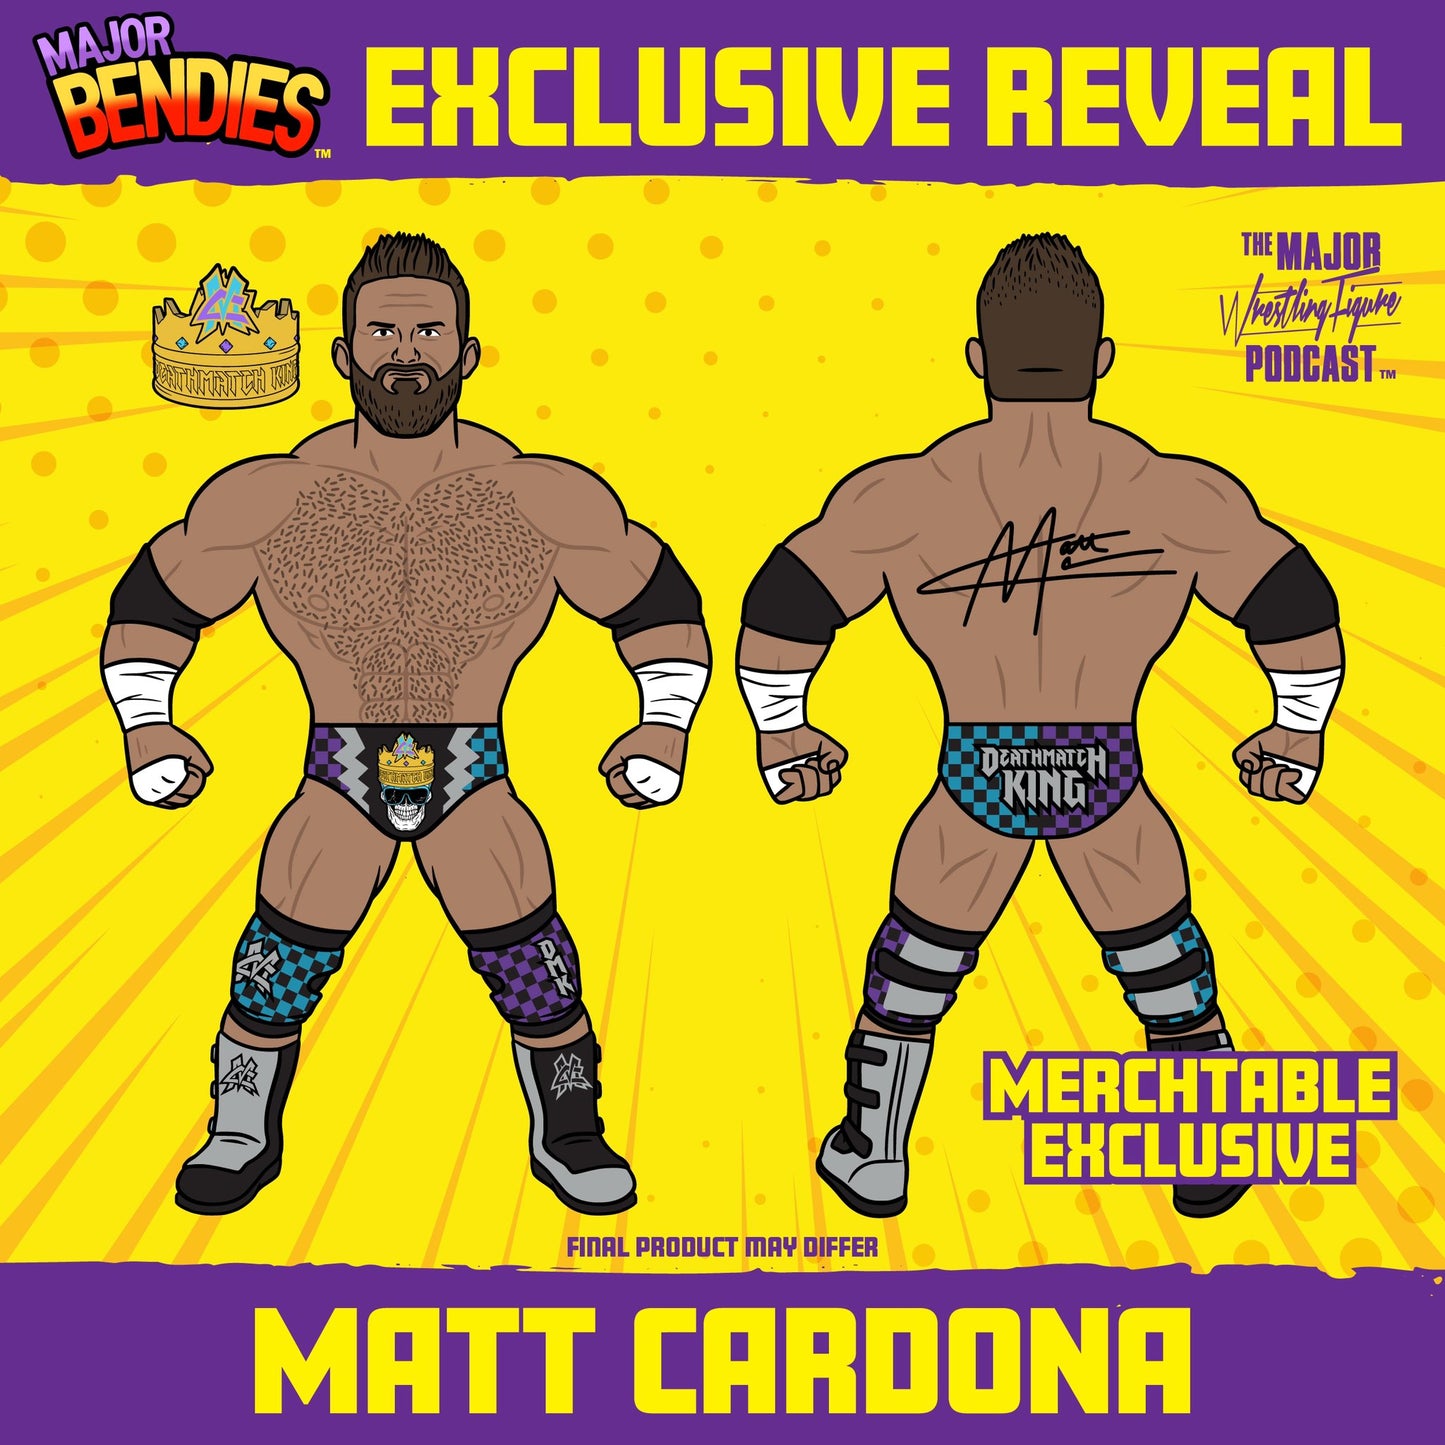 2023 Major Wrestling Figure Podcast Live Event Major Bendies “Death Match King” Matt Cardona [Merch Stand Exclusive]